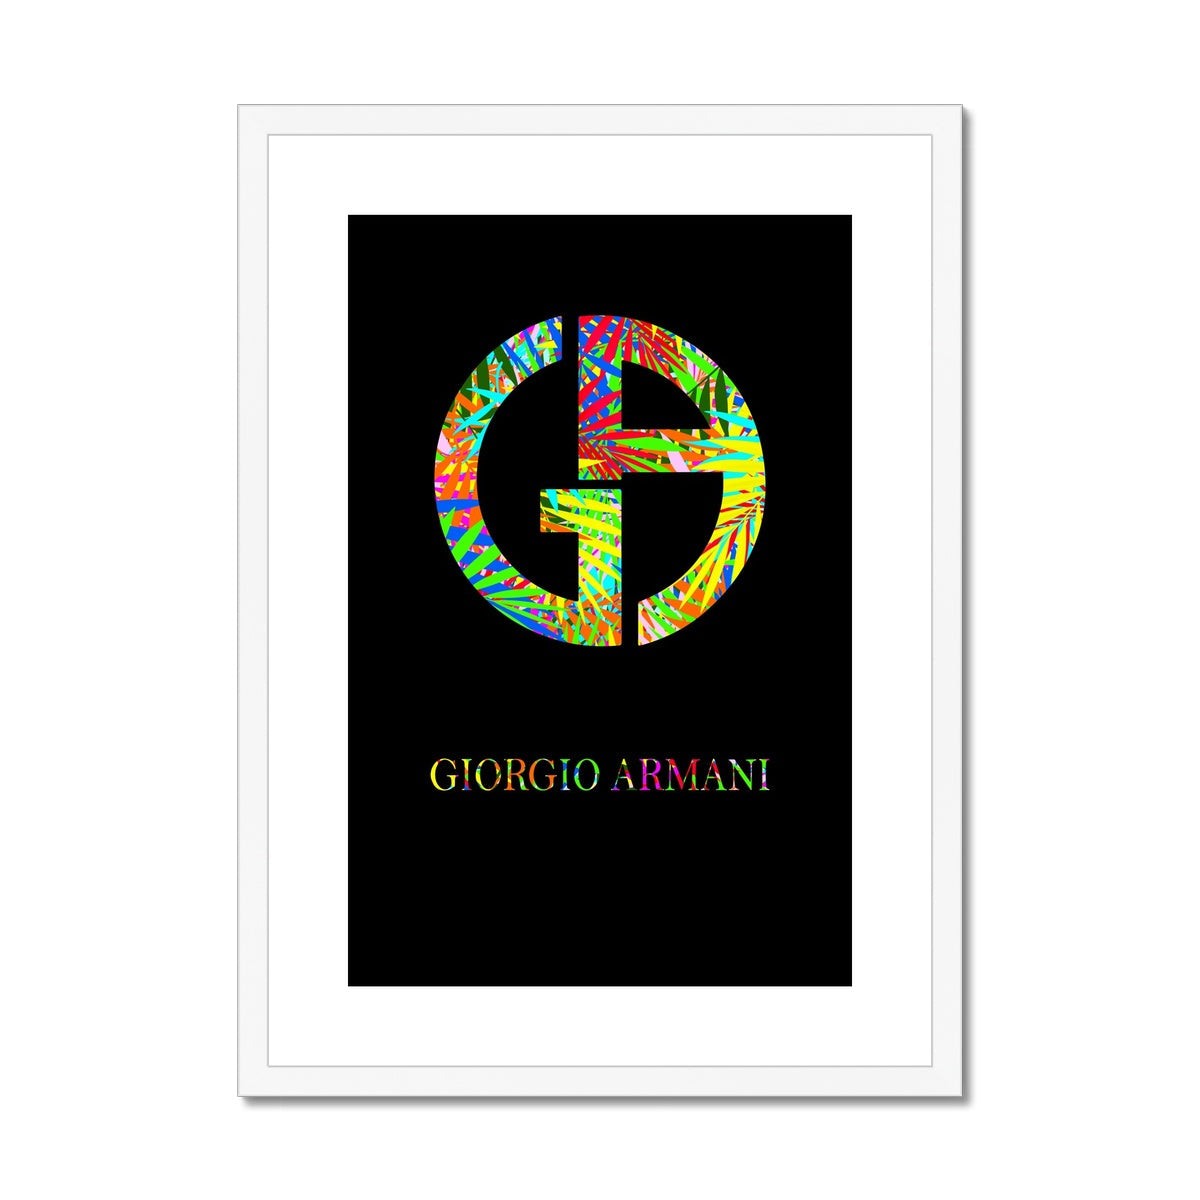 Giorgio Armani -Framed Print